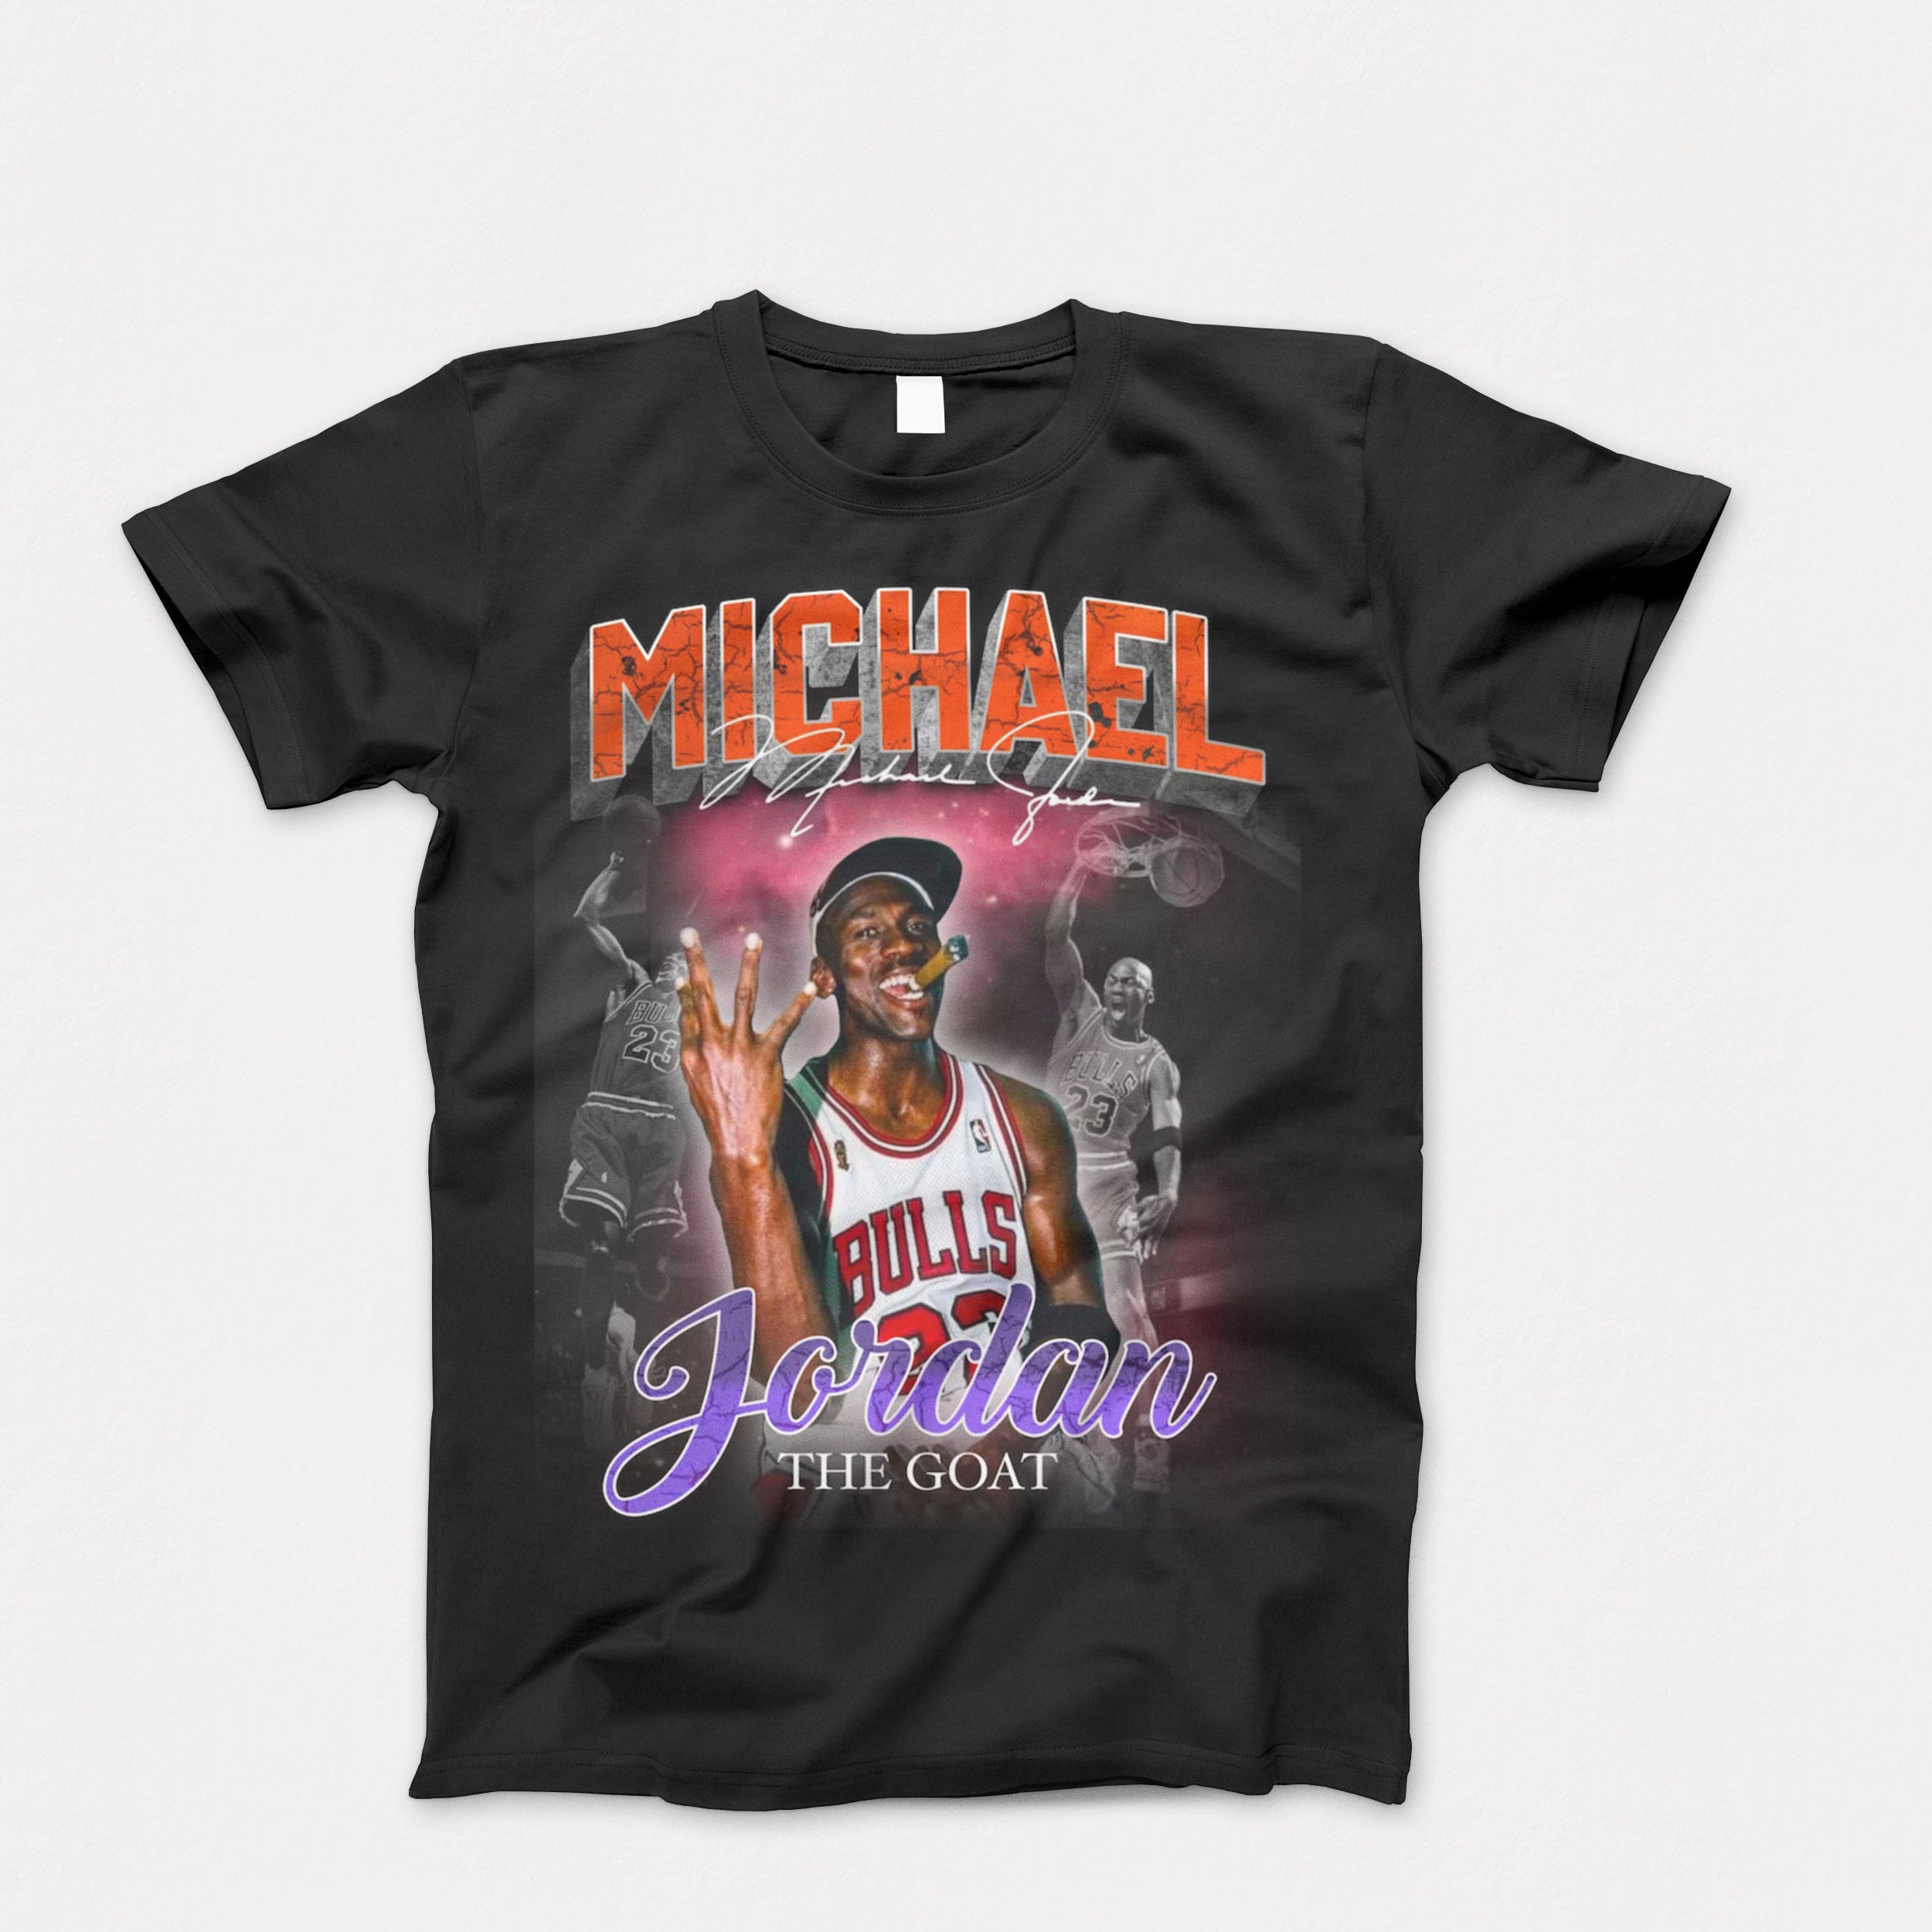 Unisex Adult Michael Jordon Tee Shirt